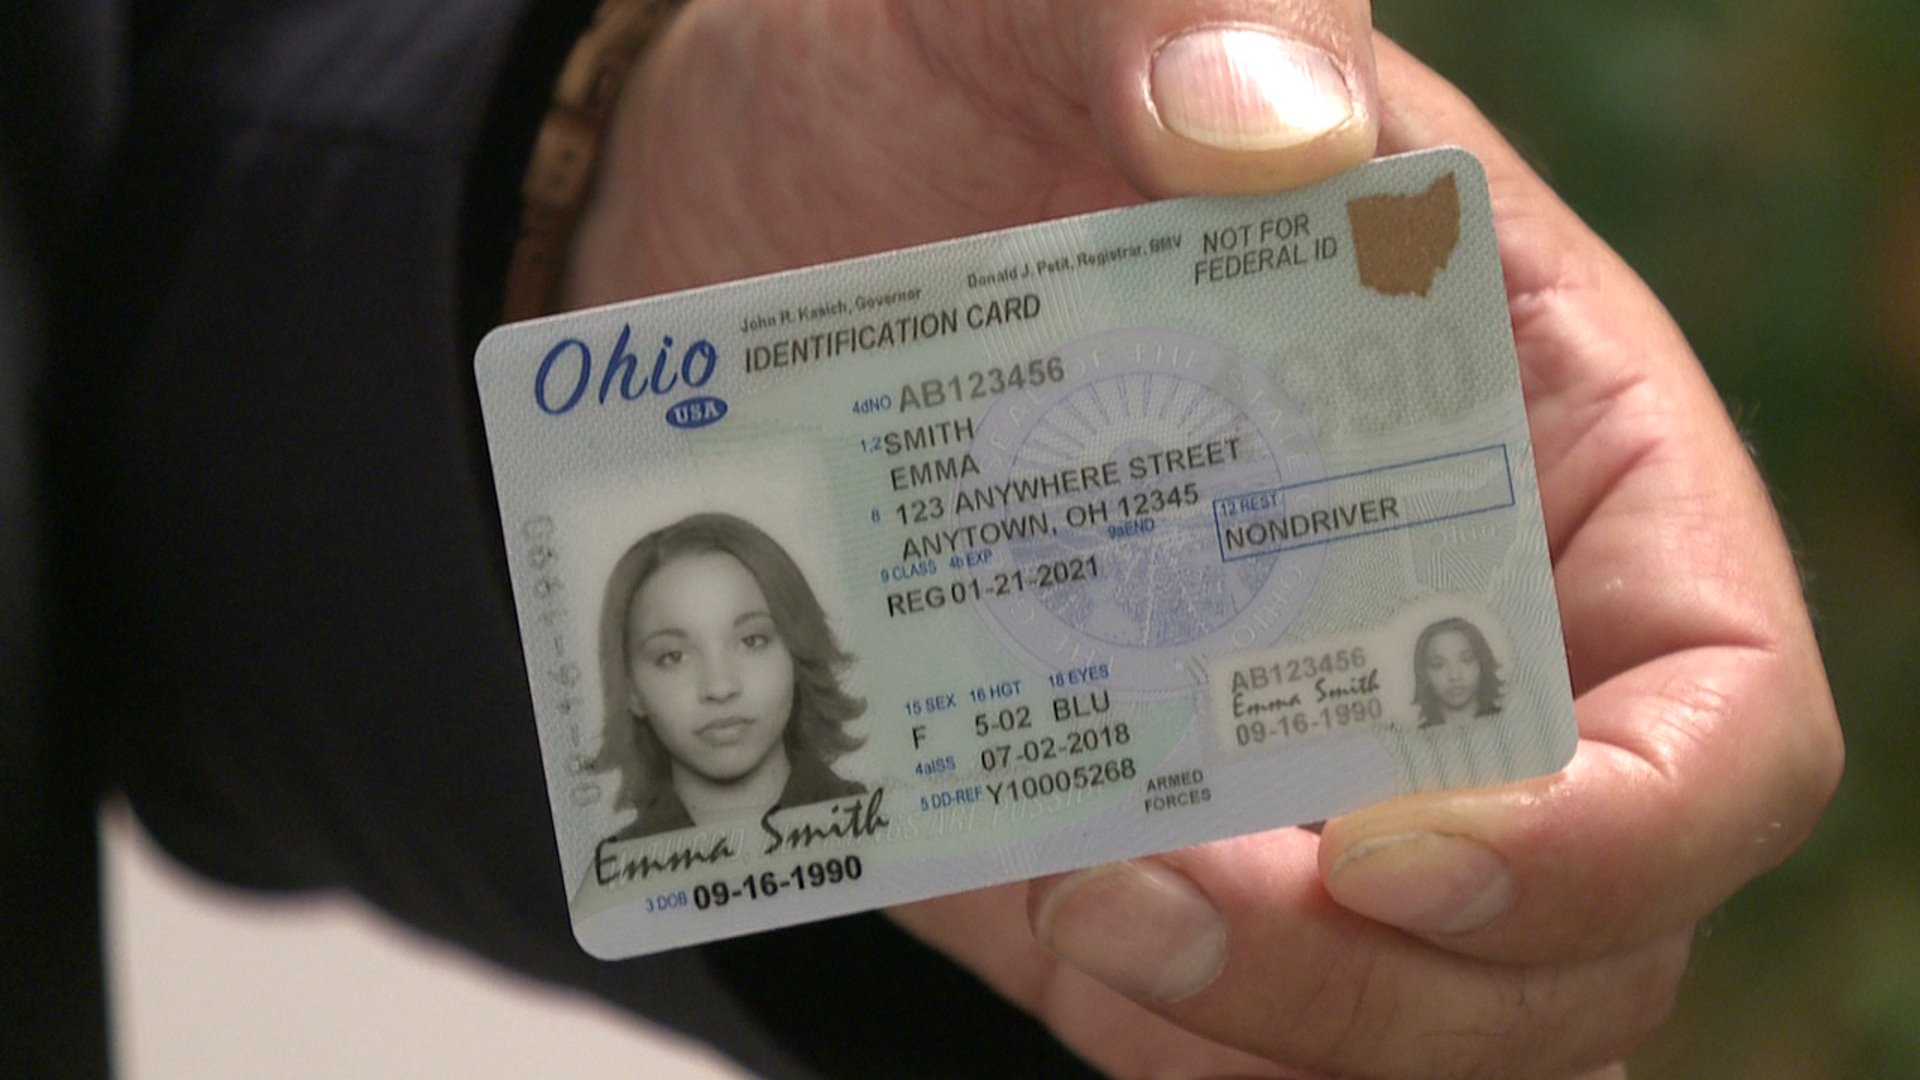 ohio driver's license 4alss